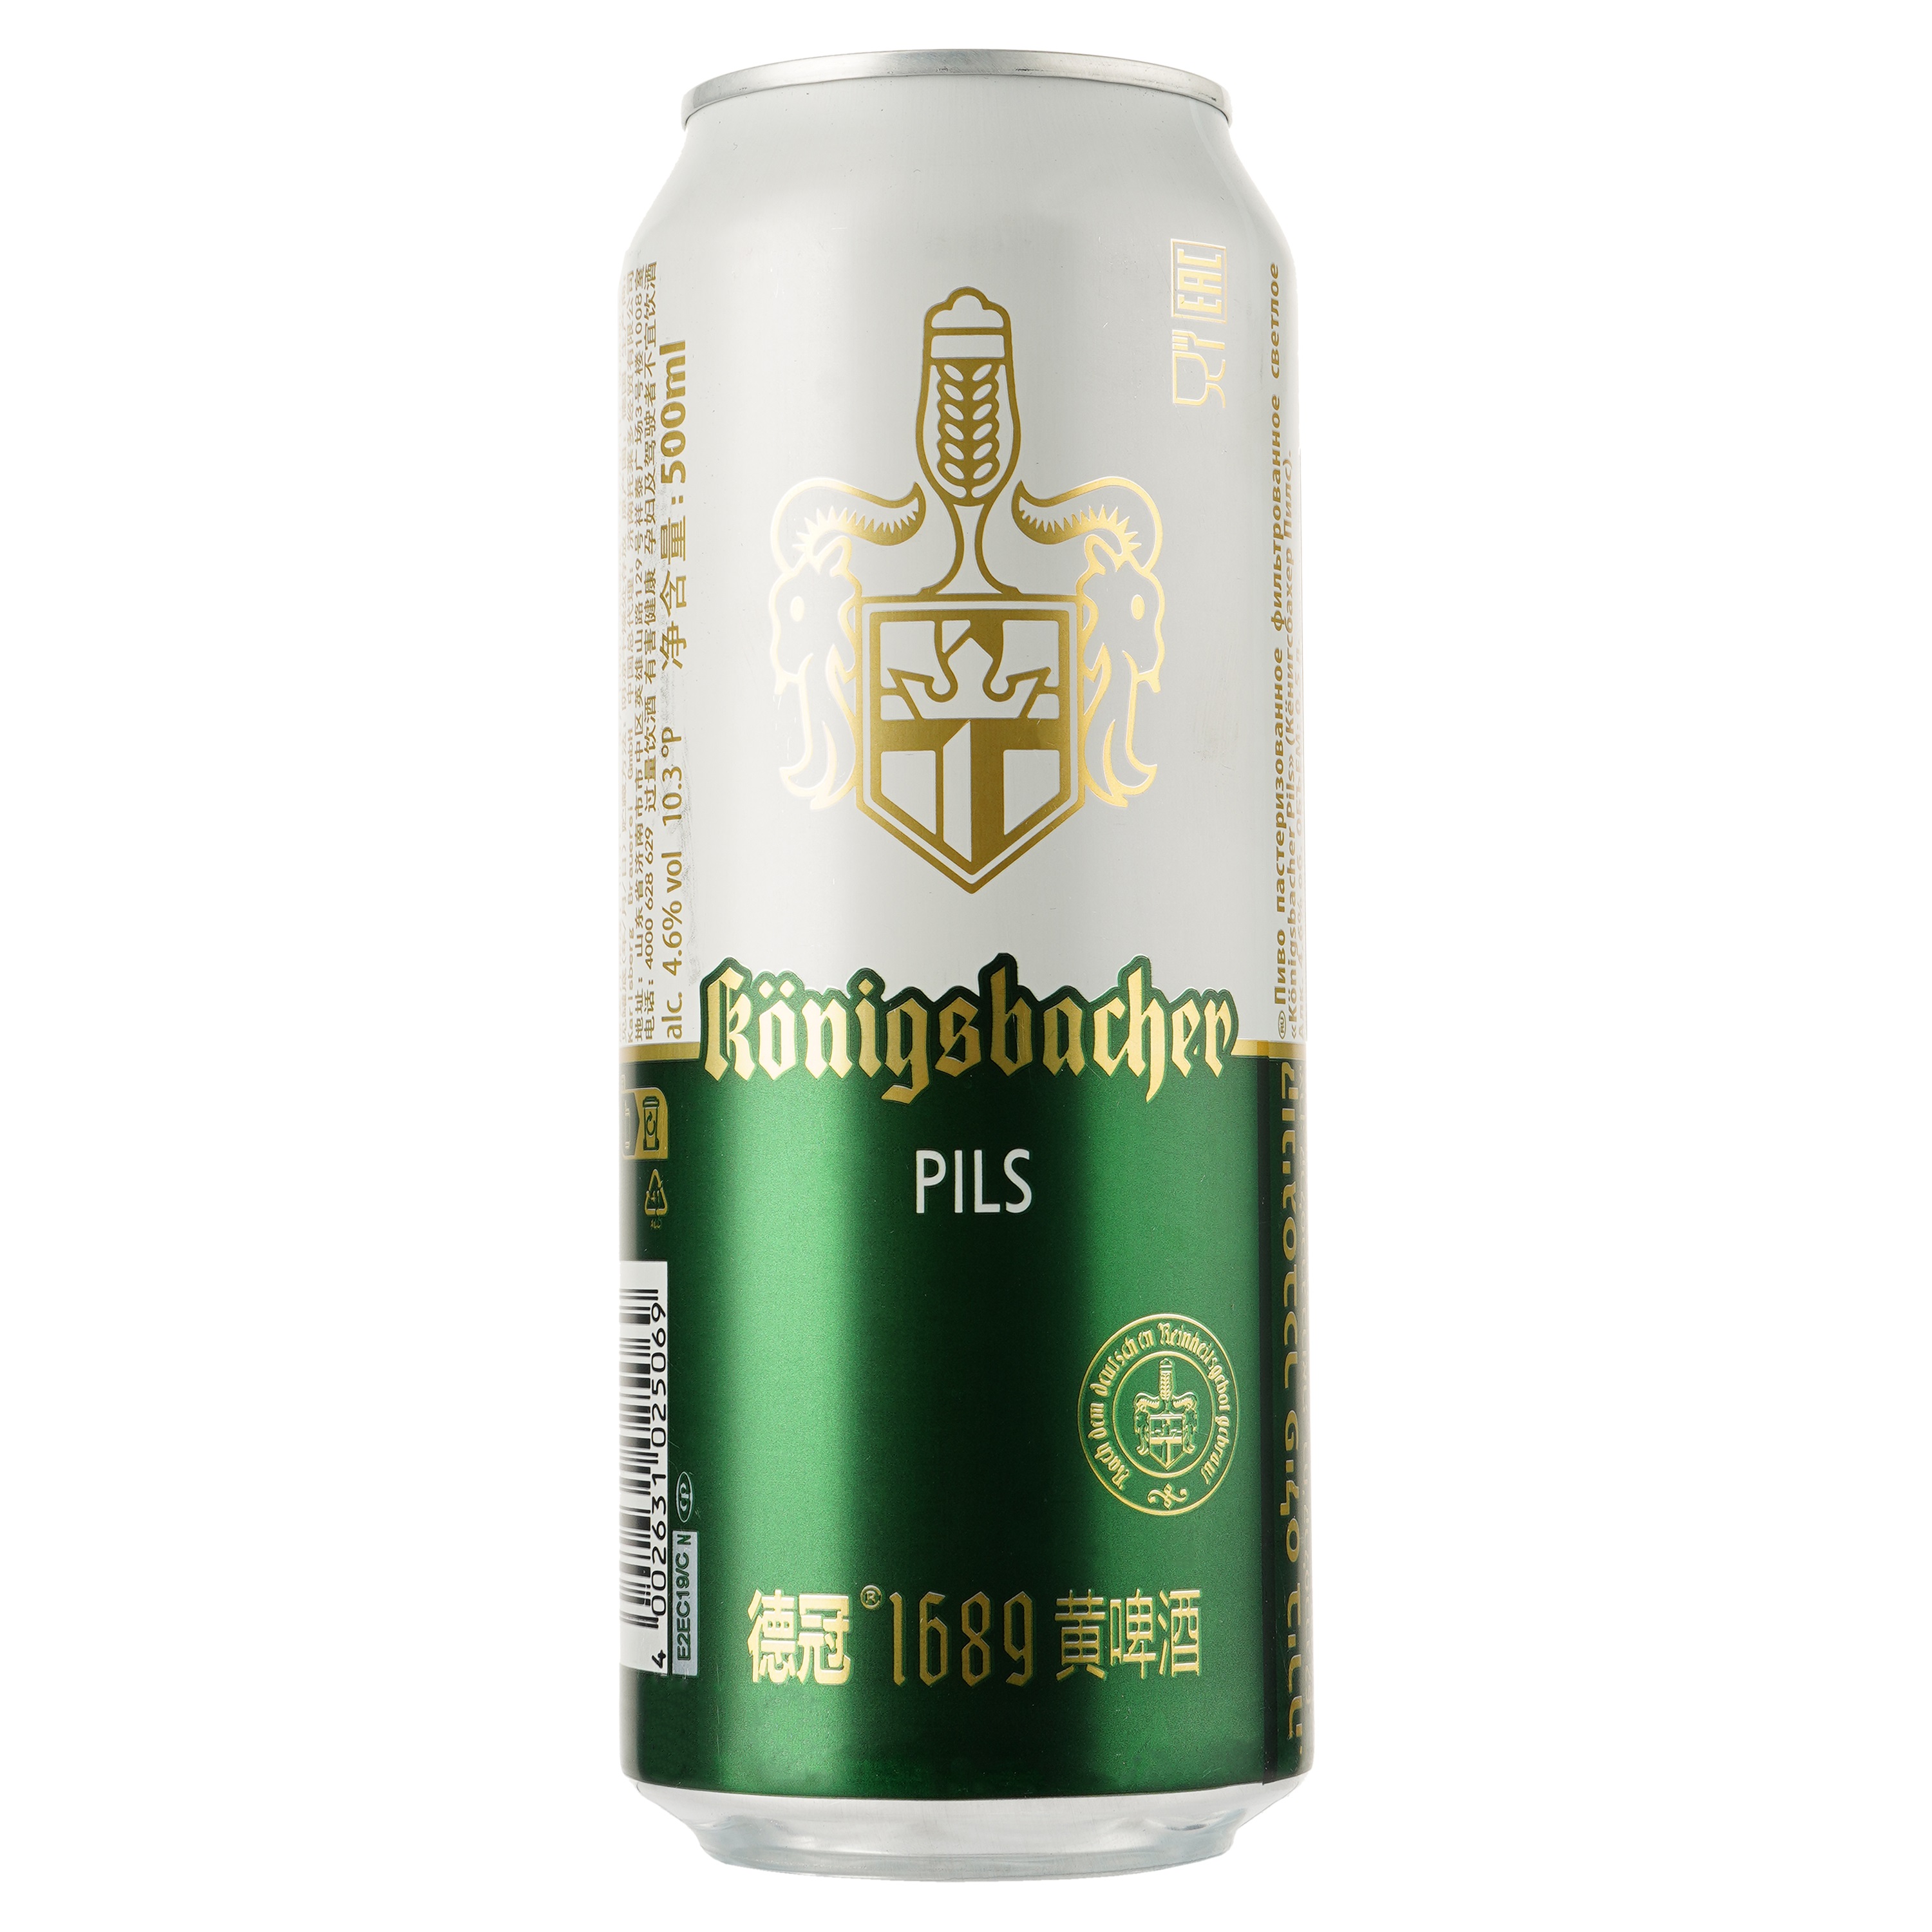 Пиво Konigsbacher Pils светлое, 4.6%, ж/б, 0.5 л - фото 1